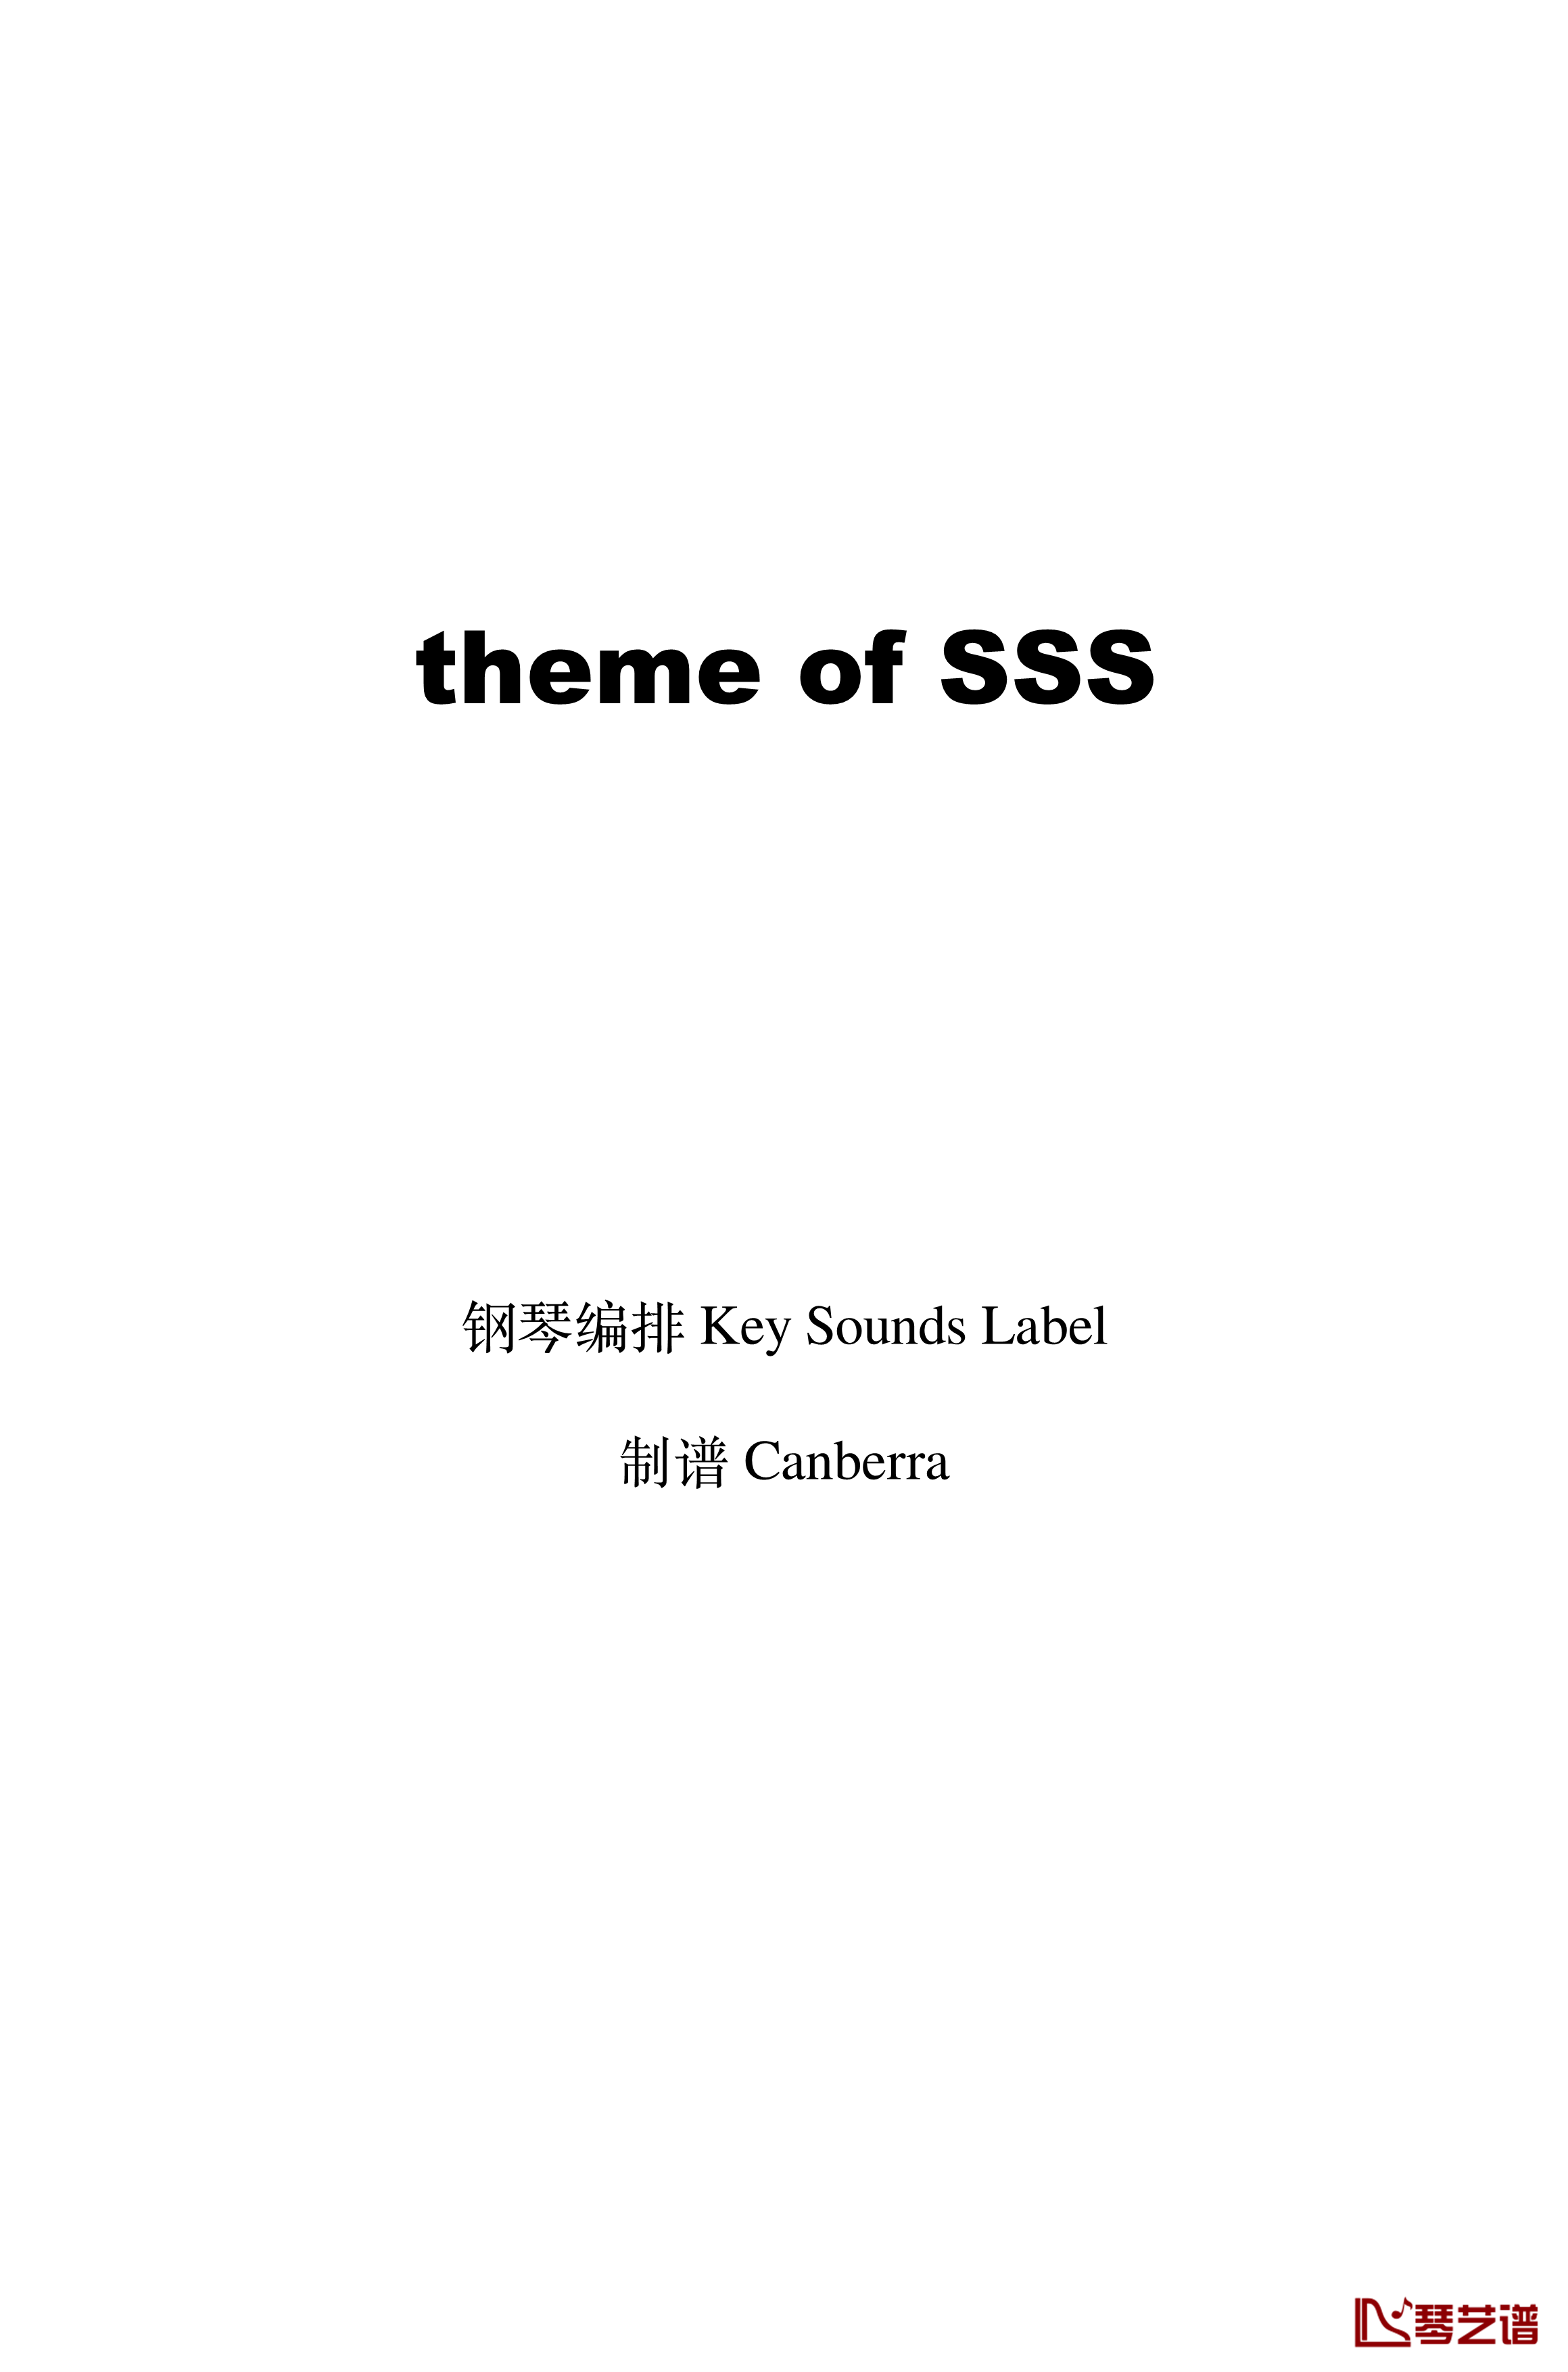 Theme of SSS钢琴谱-Key Sounds Label1